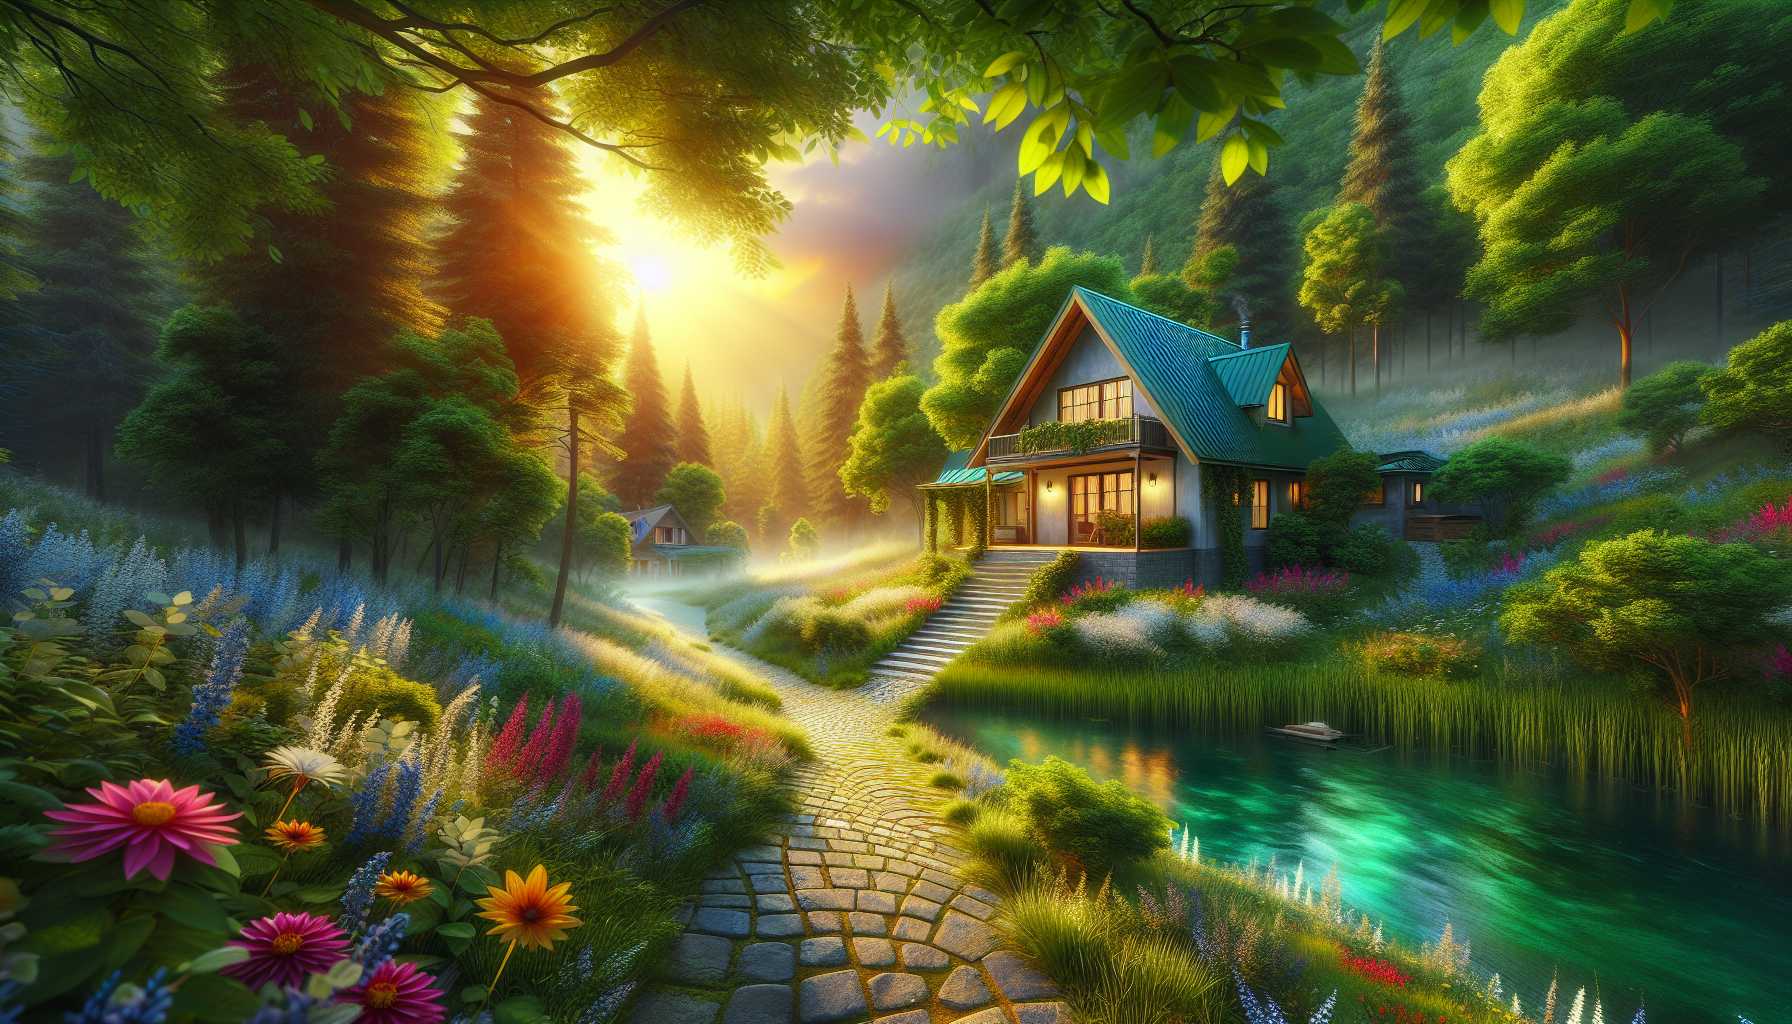 Dream home fantasy illustration